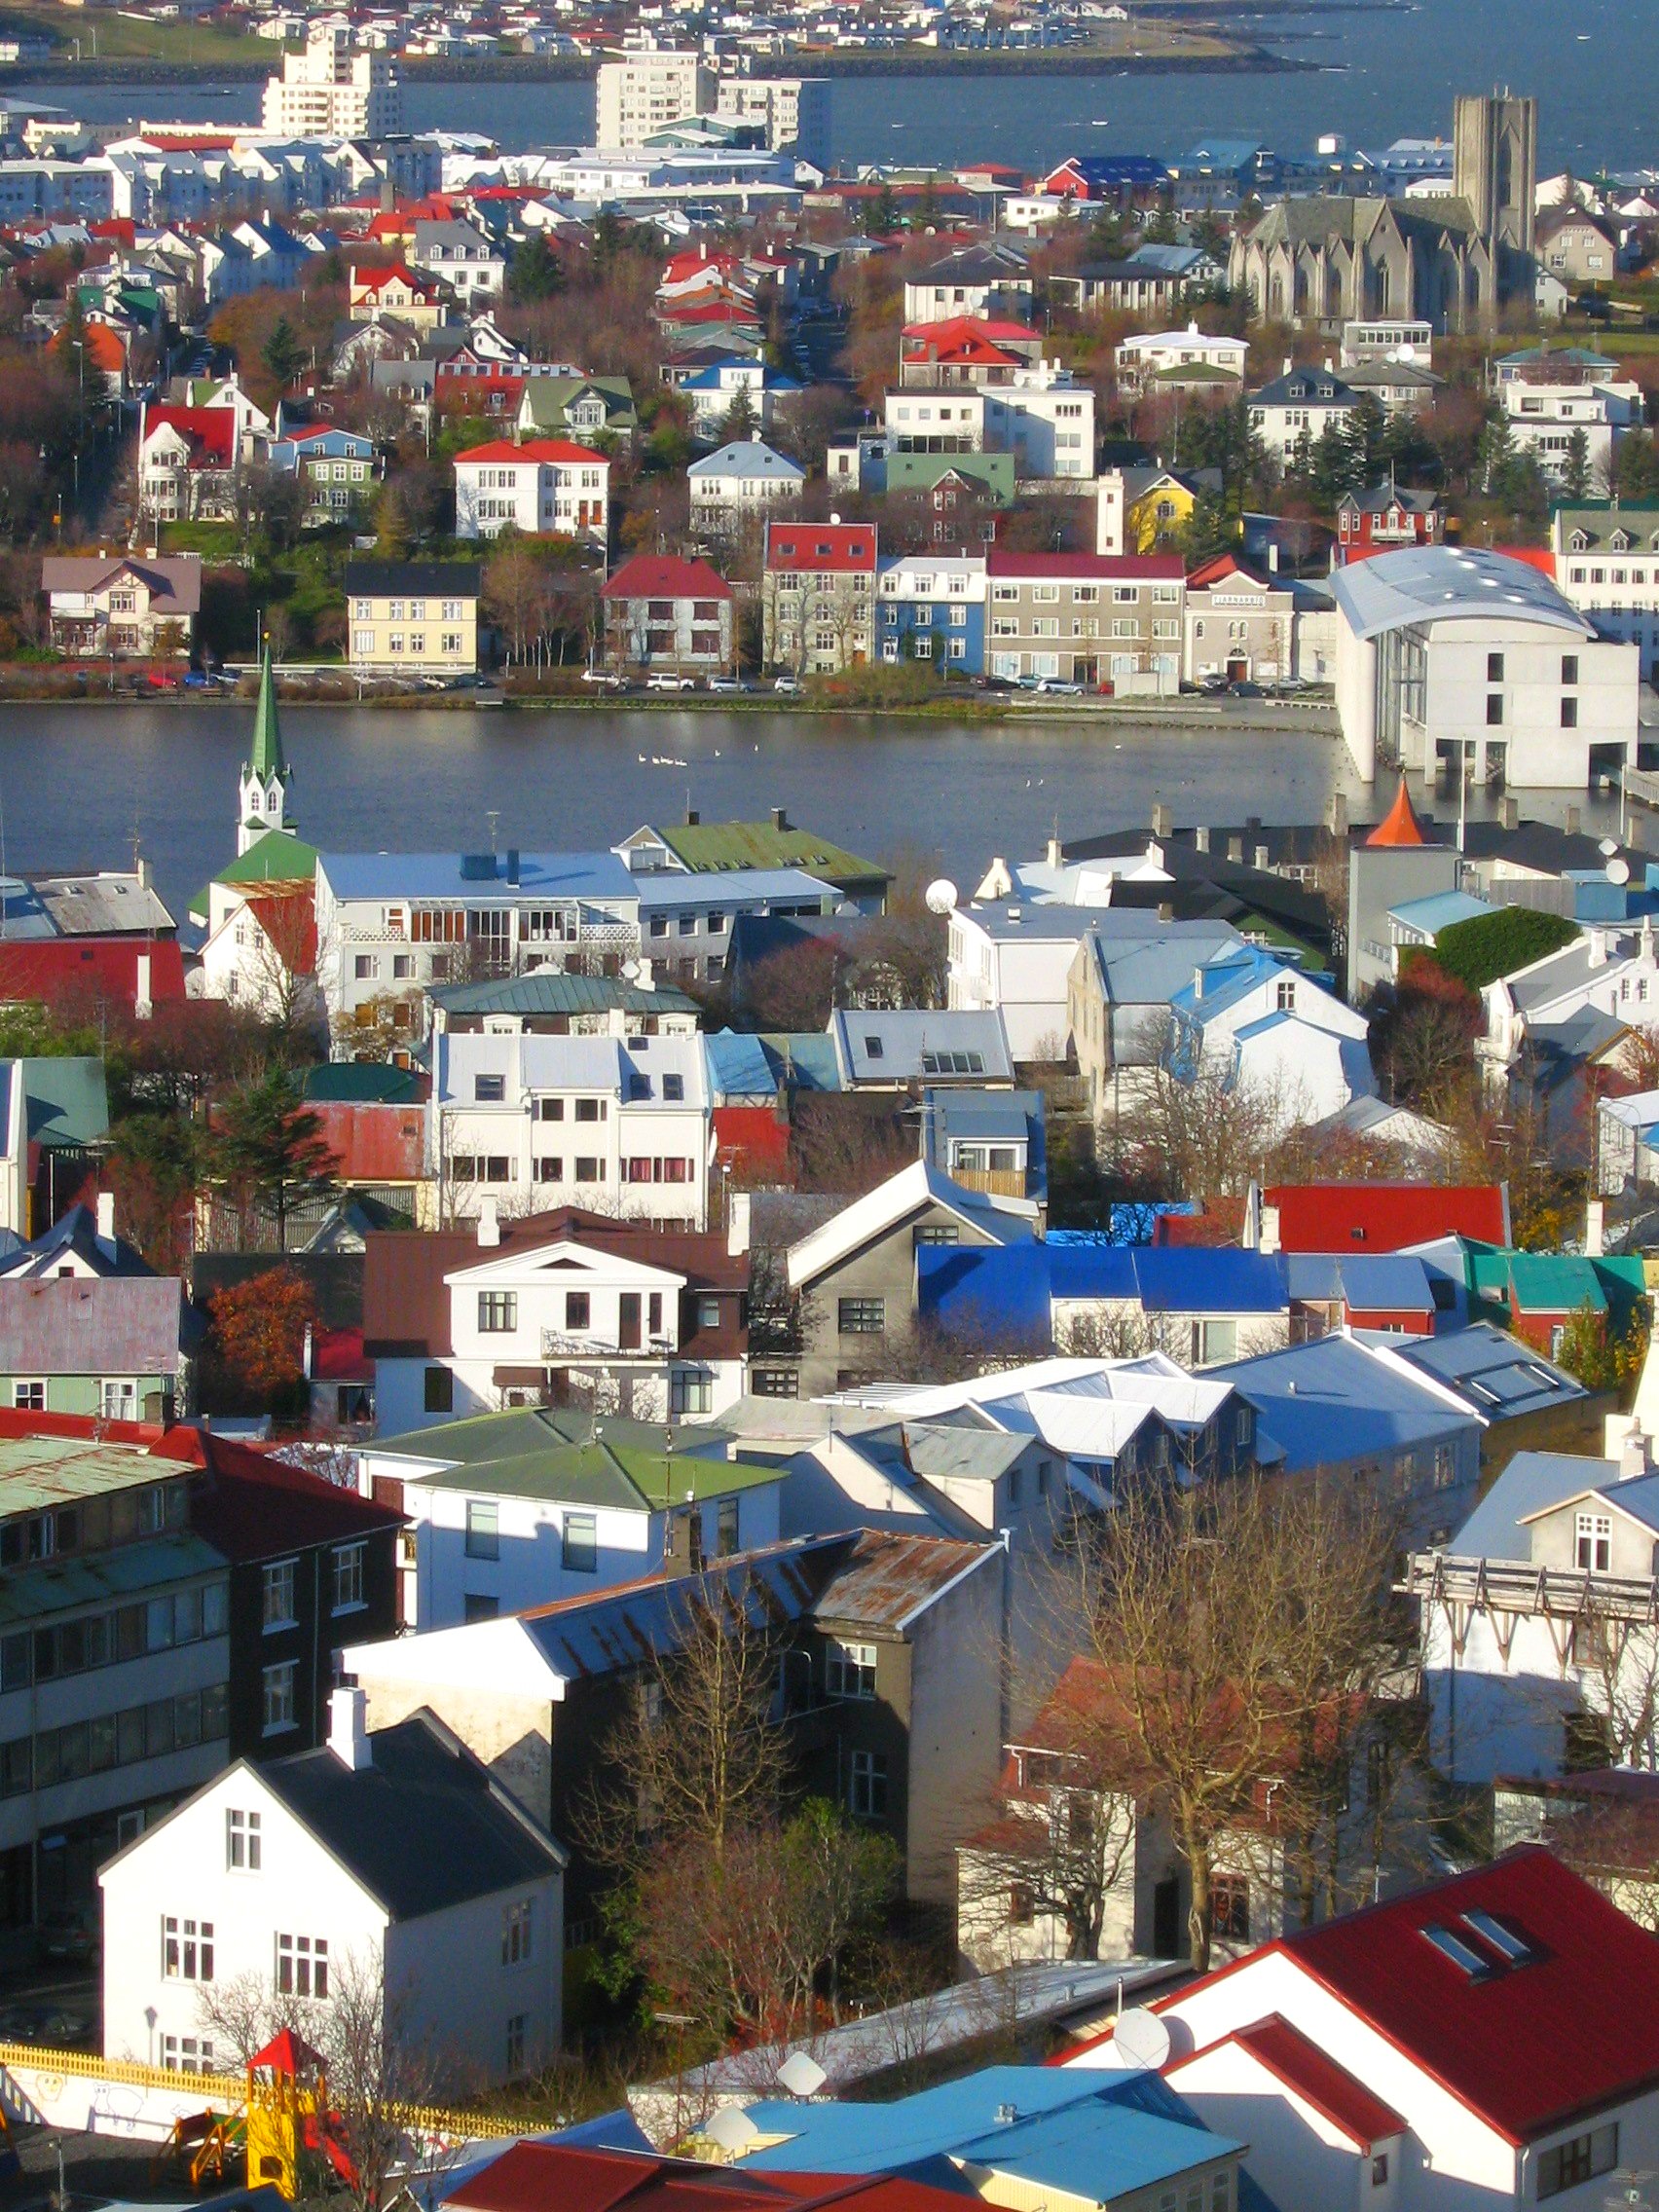 Reykjavik - old town and Tjornin